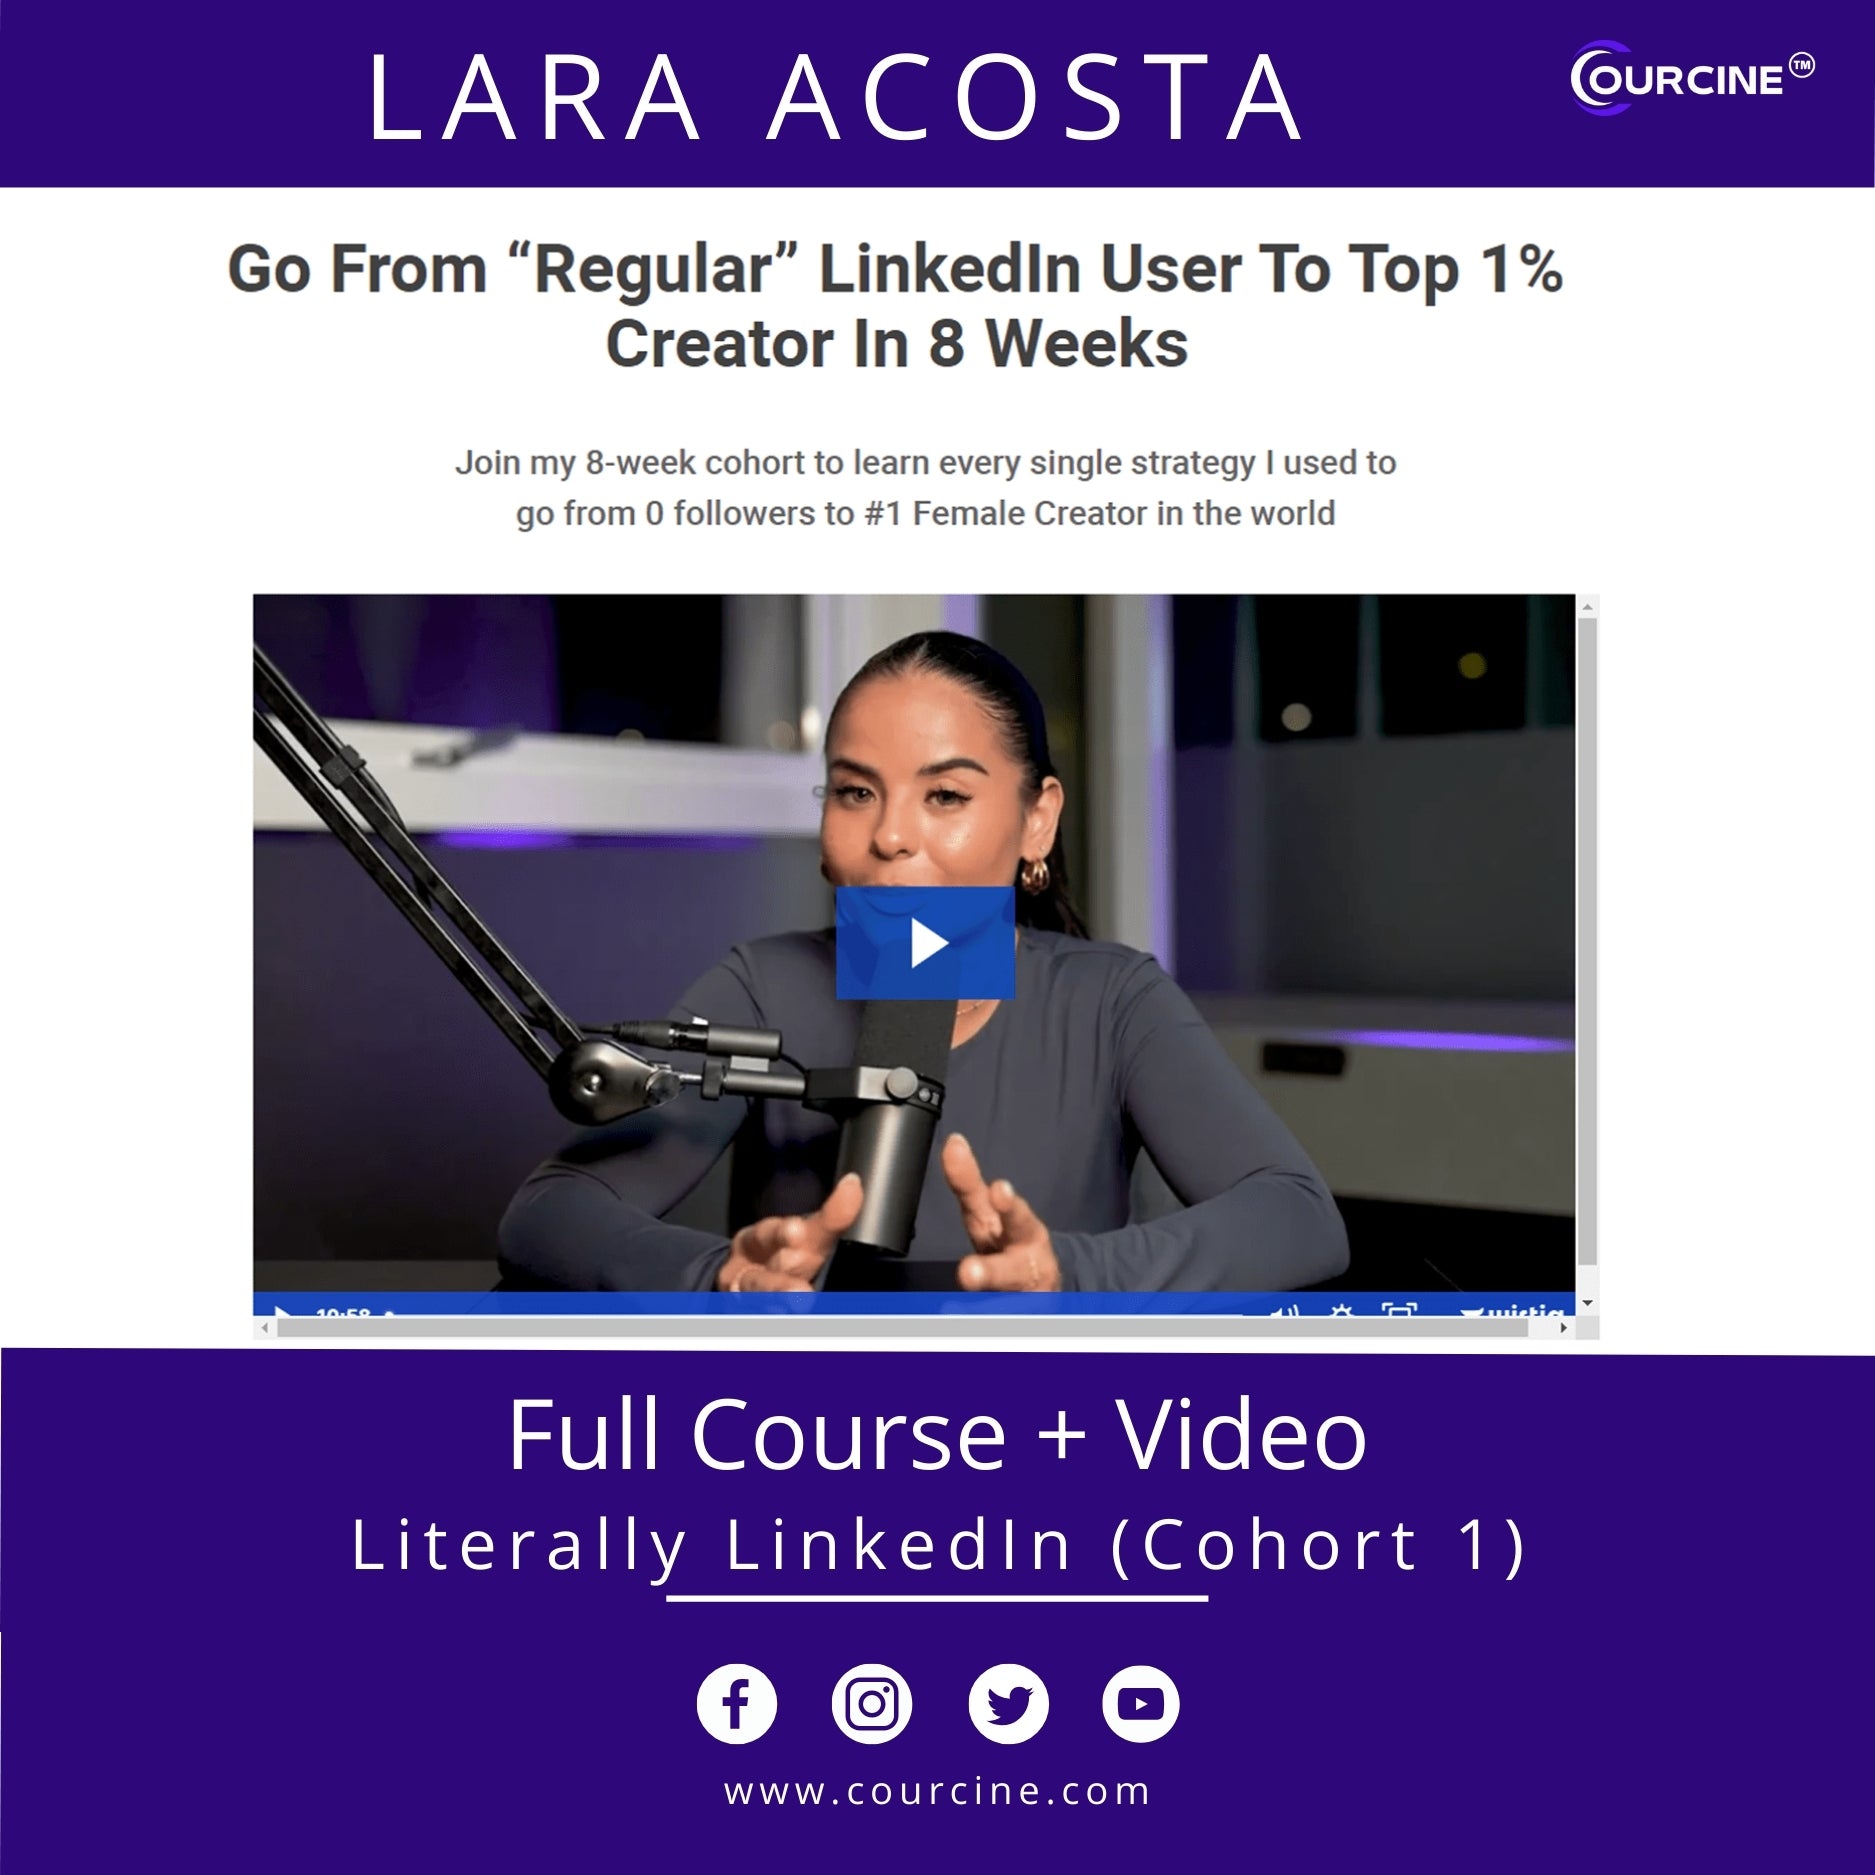 Lara Acosta – Literally LinkedIn (Cohort 1) Online Course  Drive link